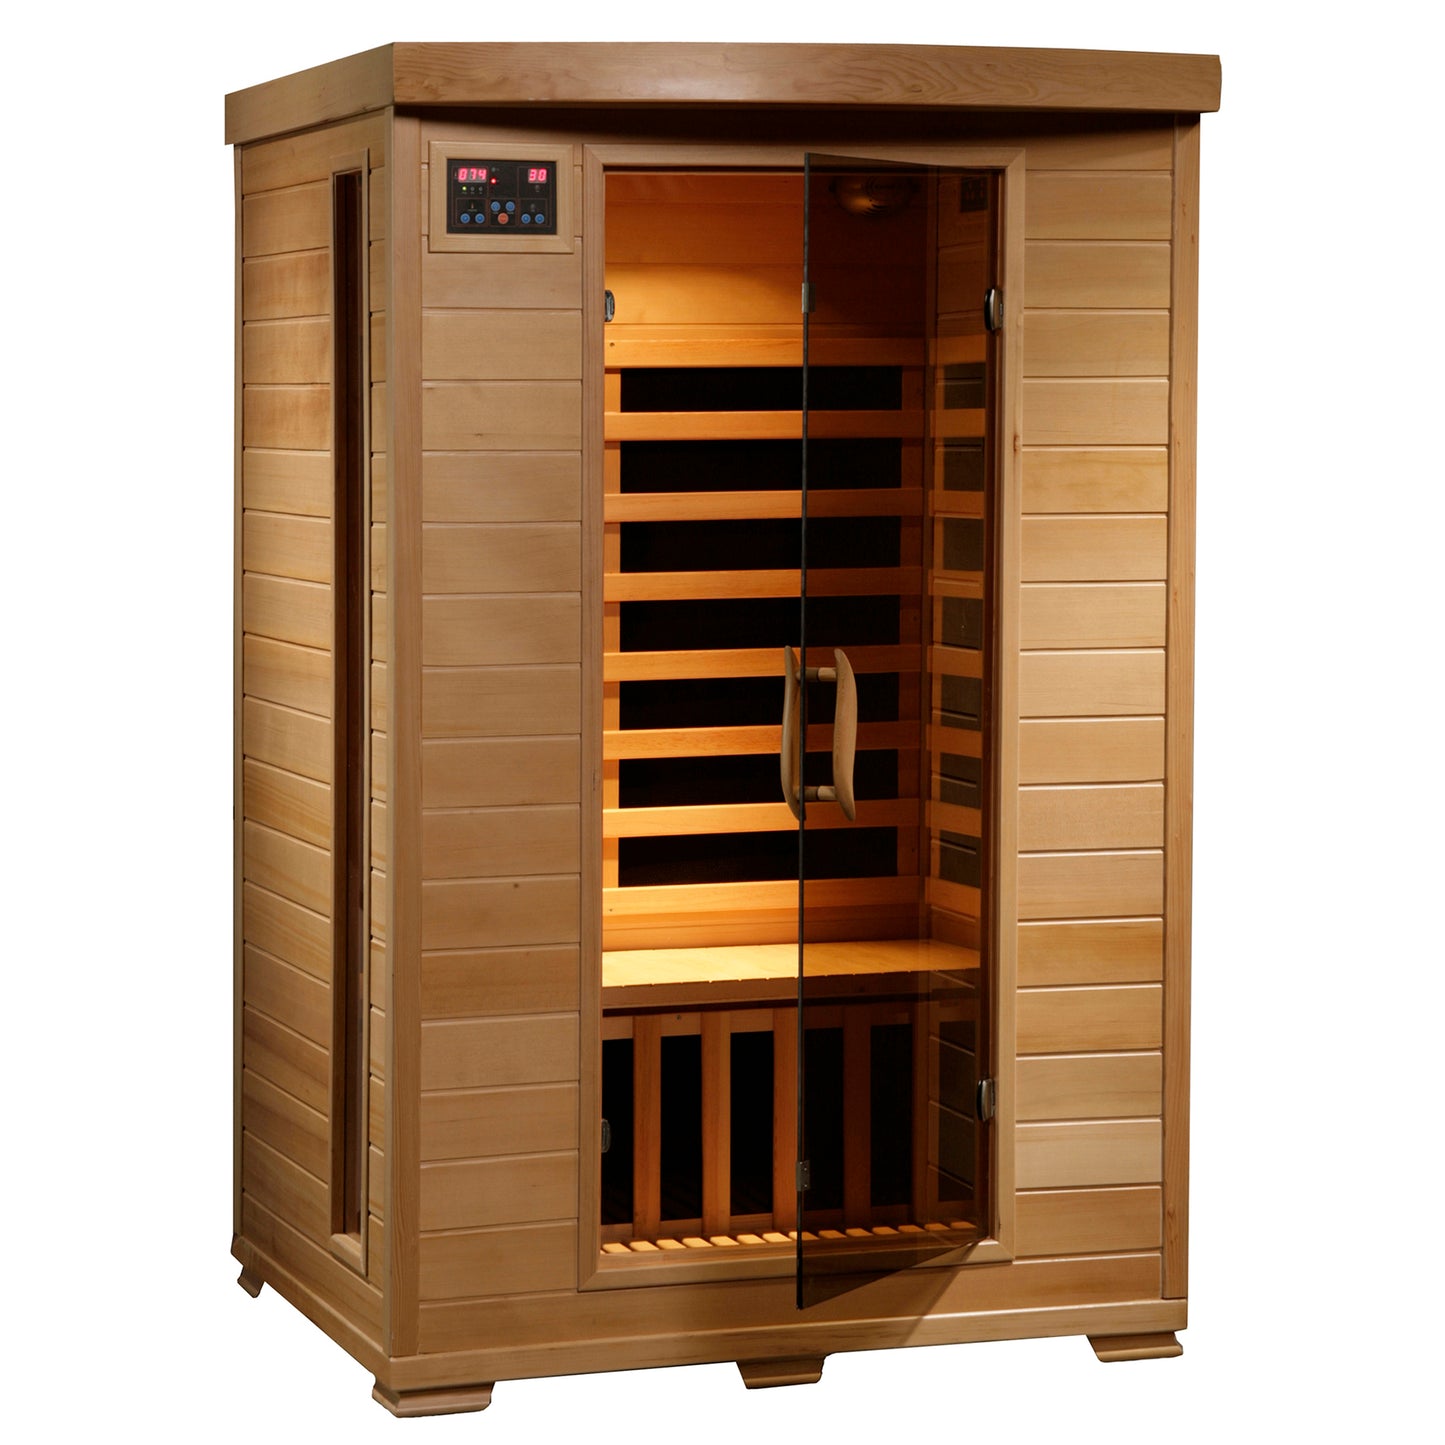 Infrared 2 Person Sauna with Carbon Heaters - Coronado Series - SA2409